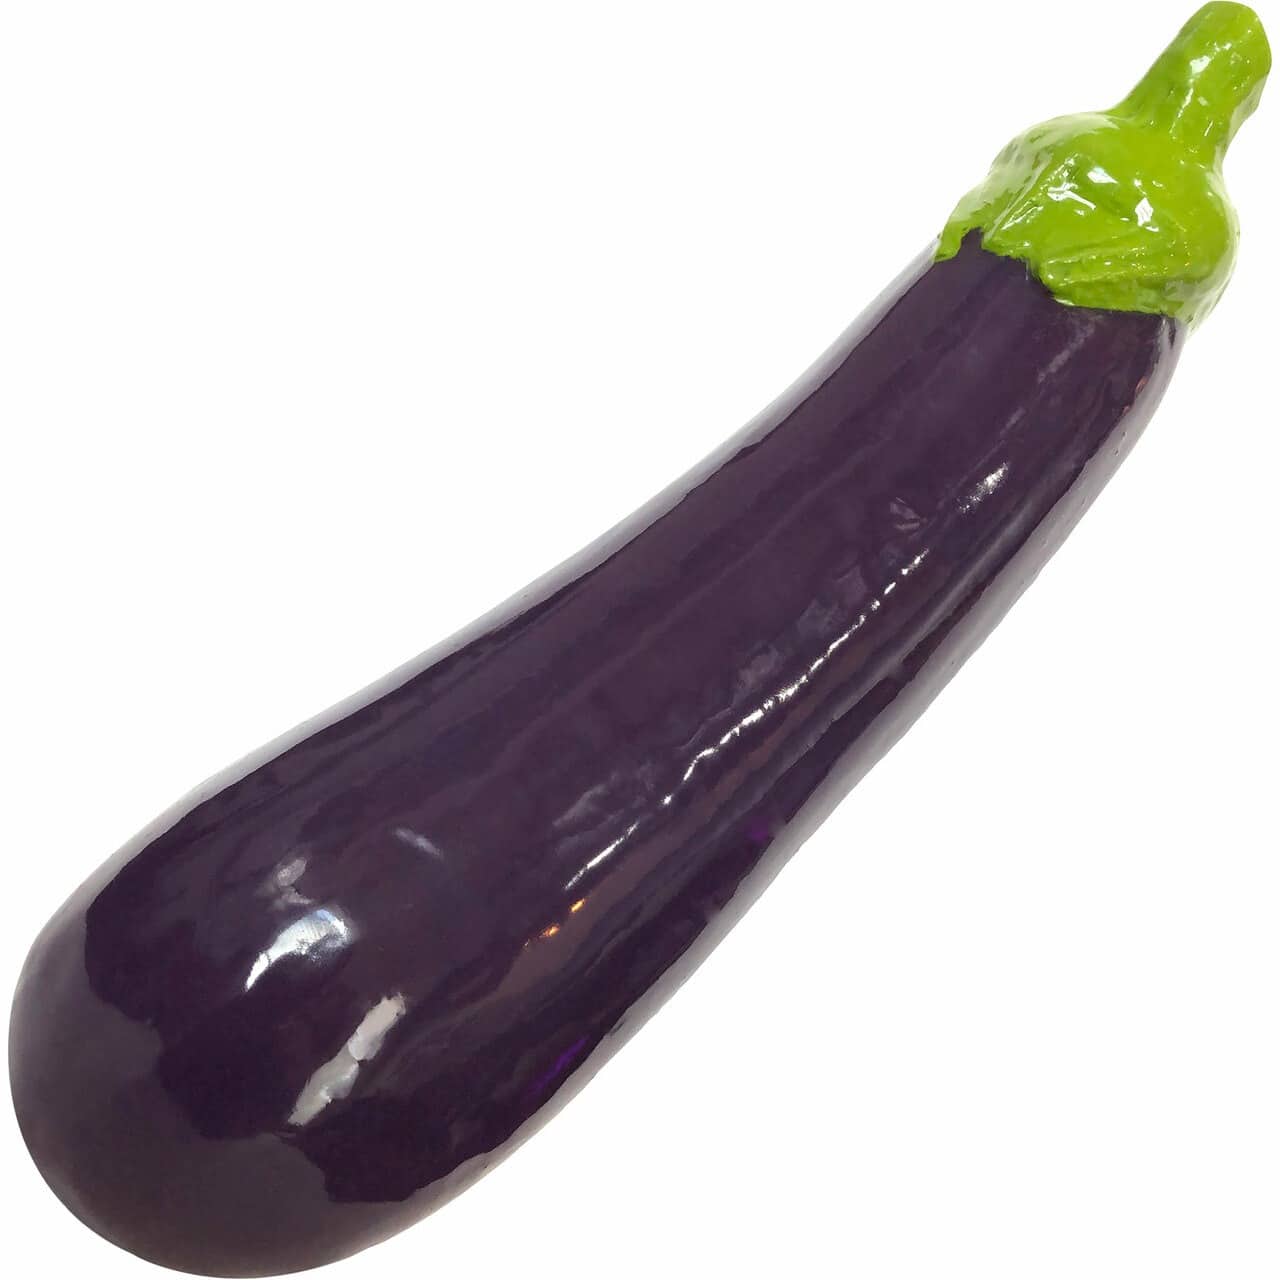 Eggplant Silicone Dildo By SelfDelve